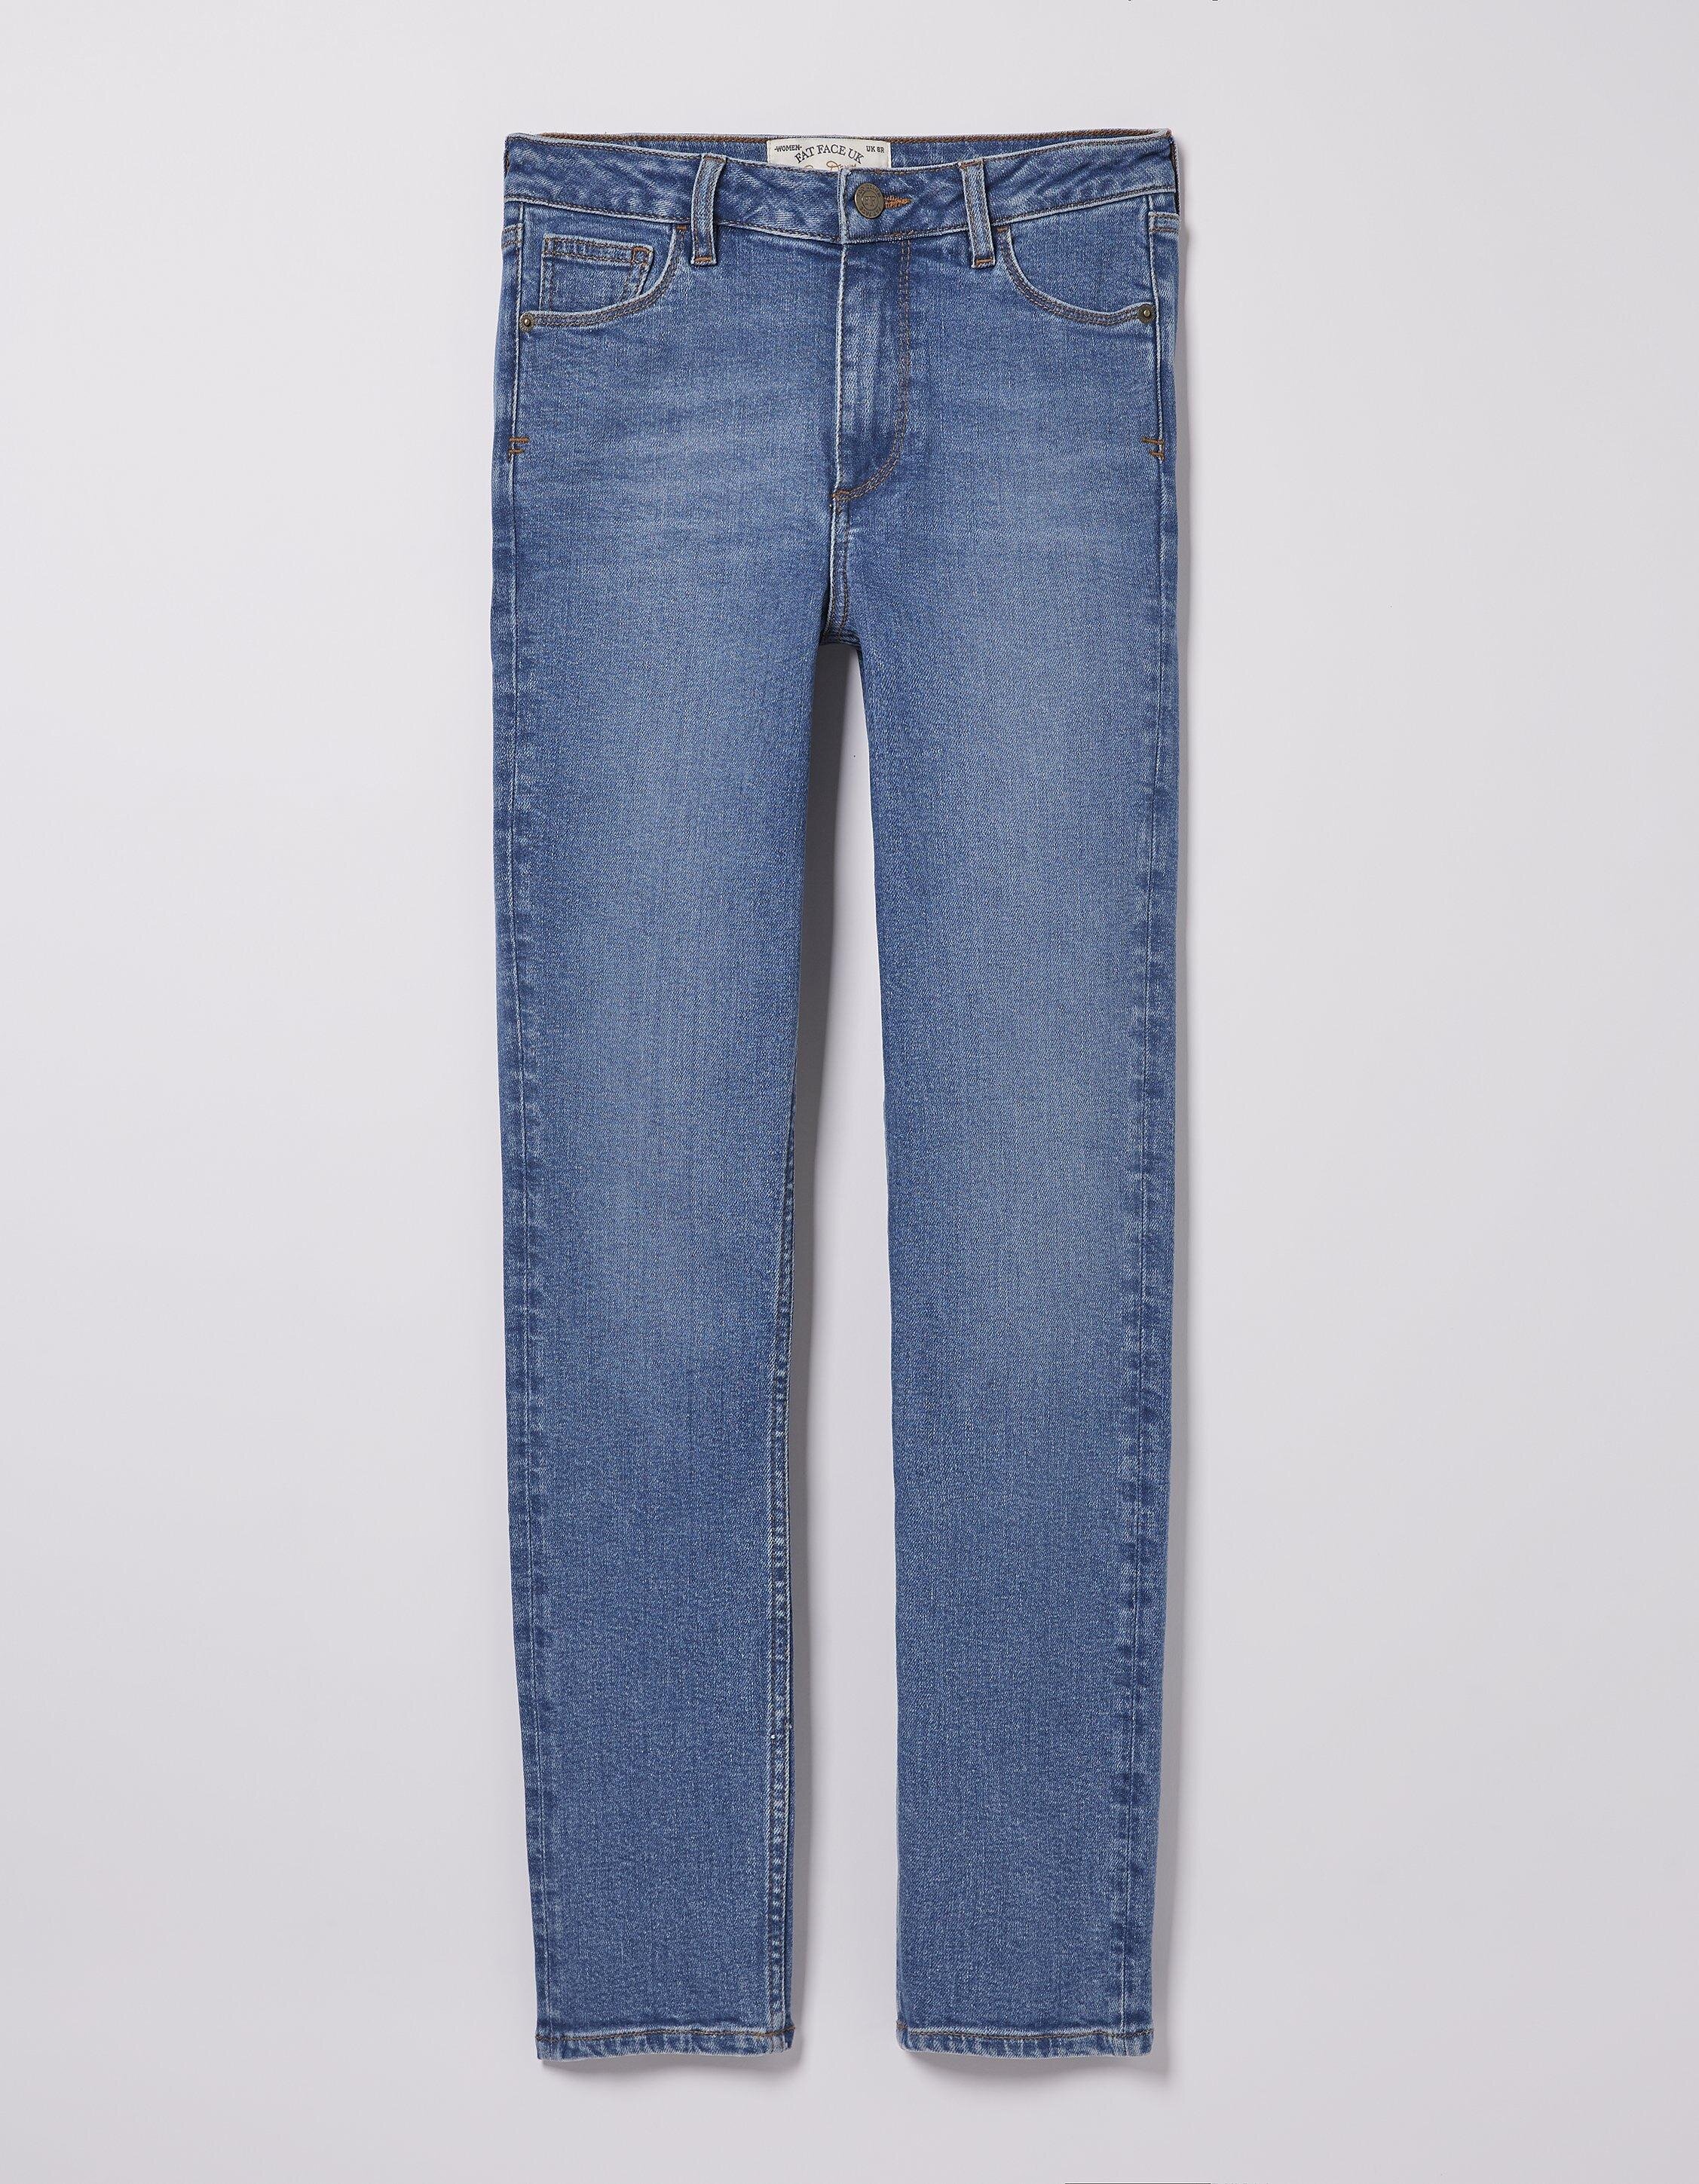 Fat Face Short Slim Jeans £49.50